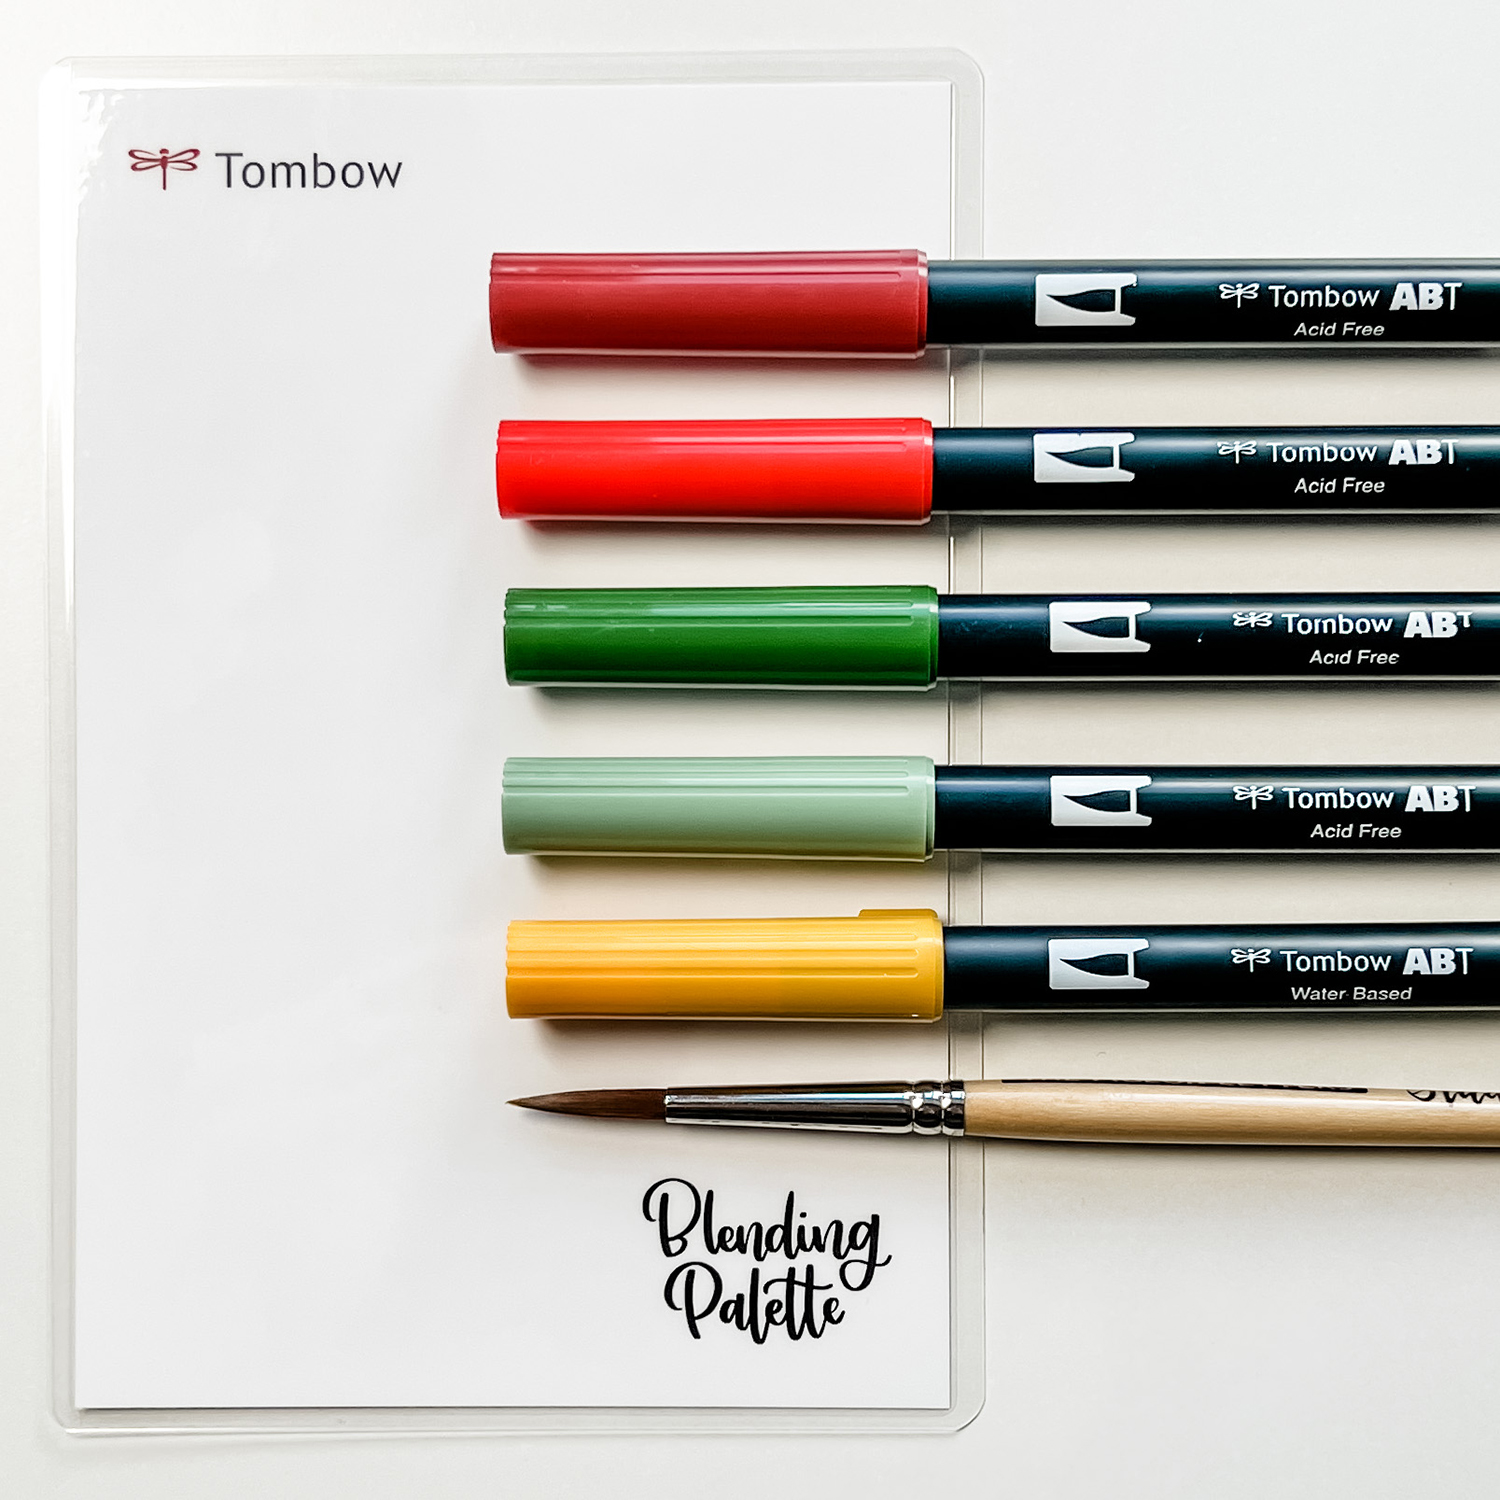 Dual Brush Pen Art Markers 10-Pack, Nineties